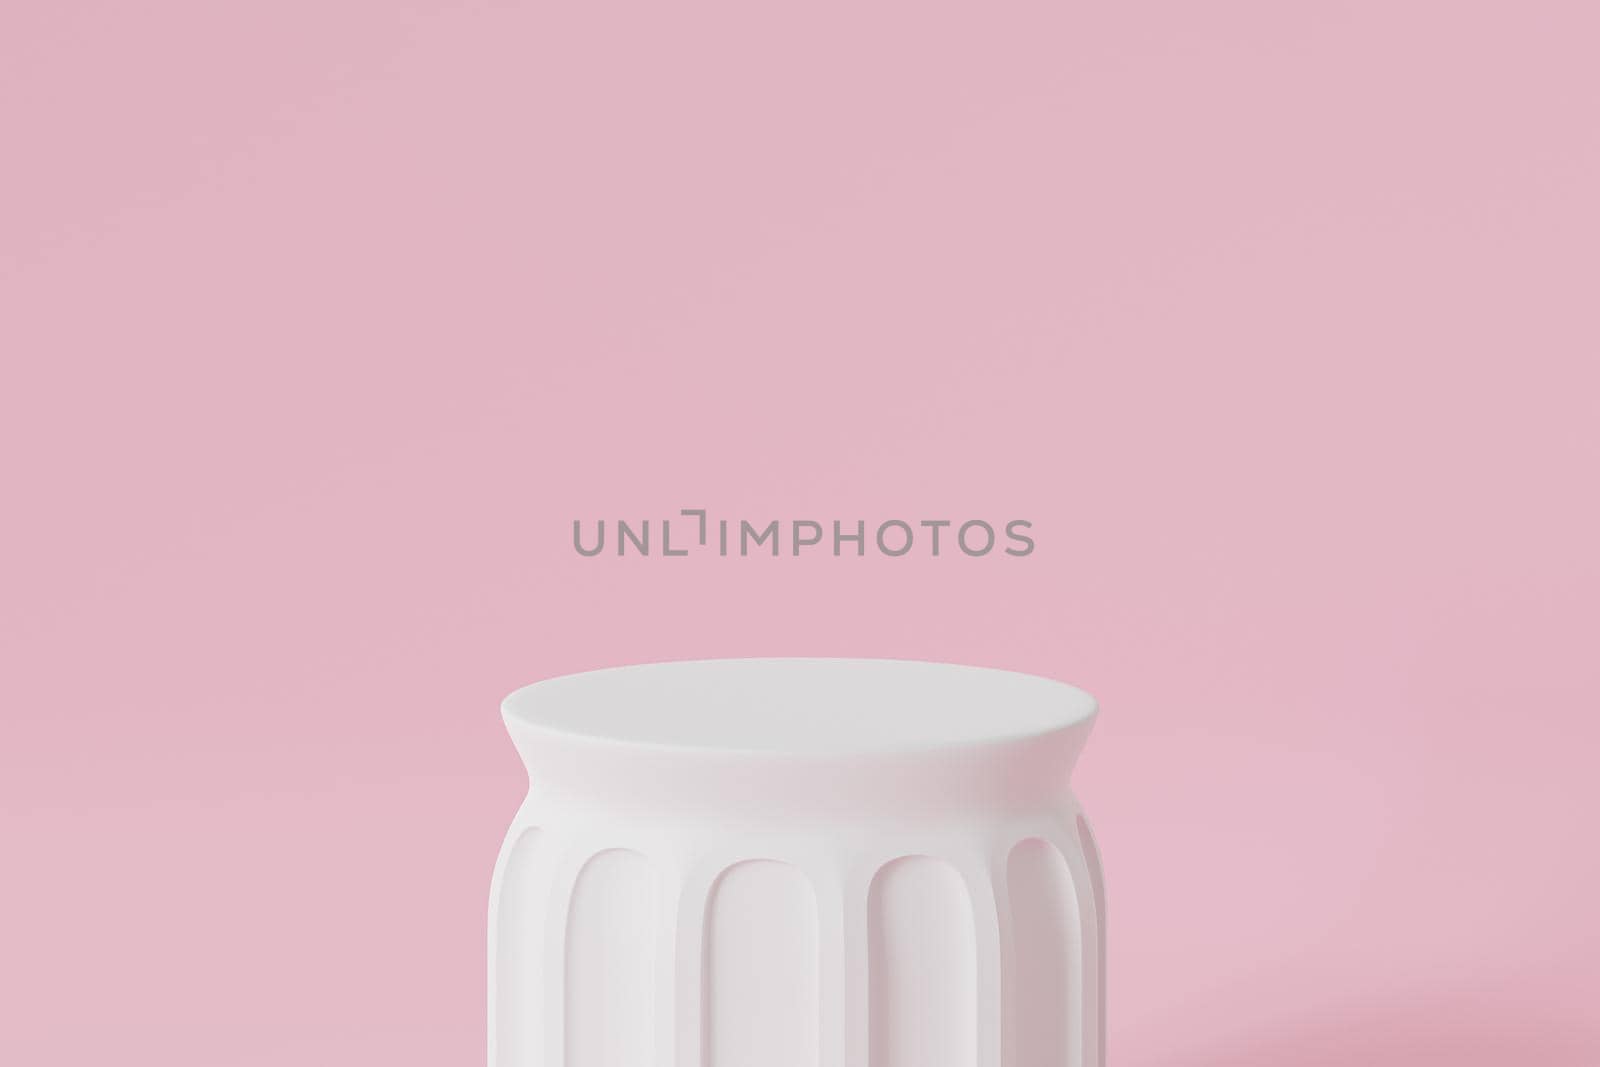 White pillar podium or pedestal for products or advertising on pink background, minimal 3d illustration render